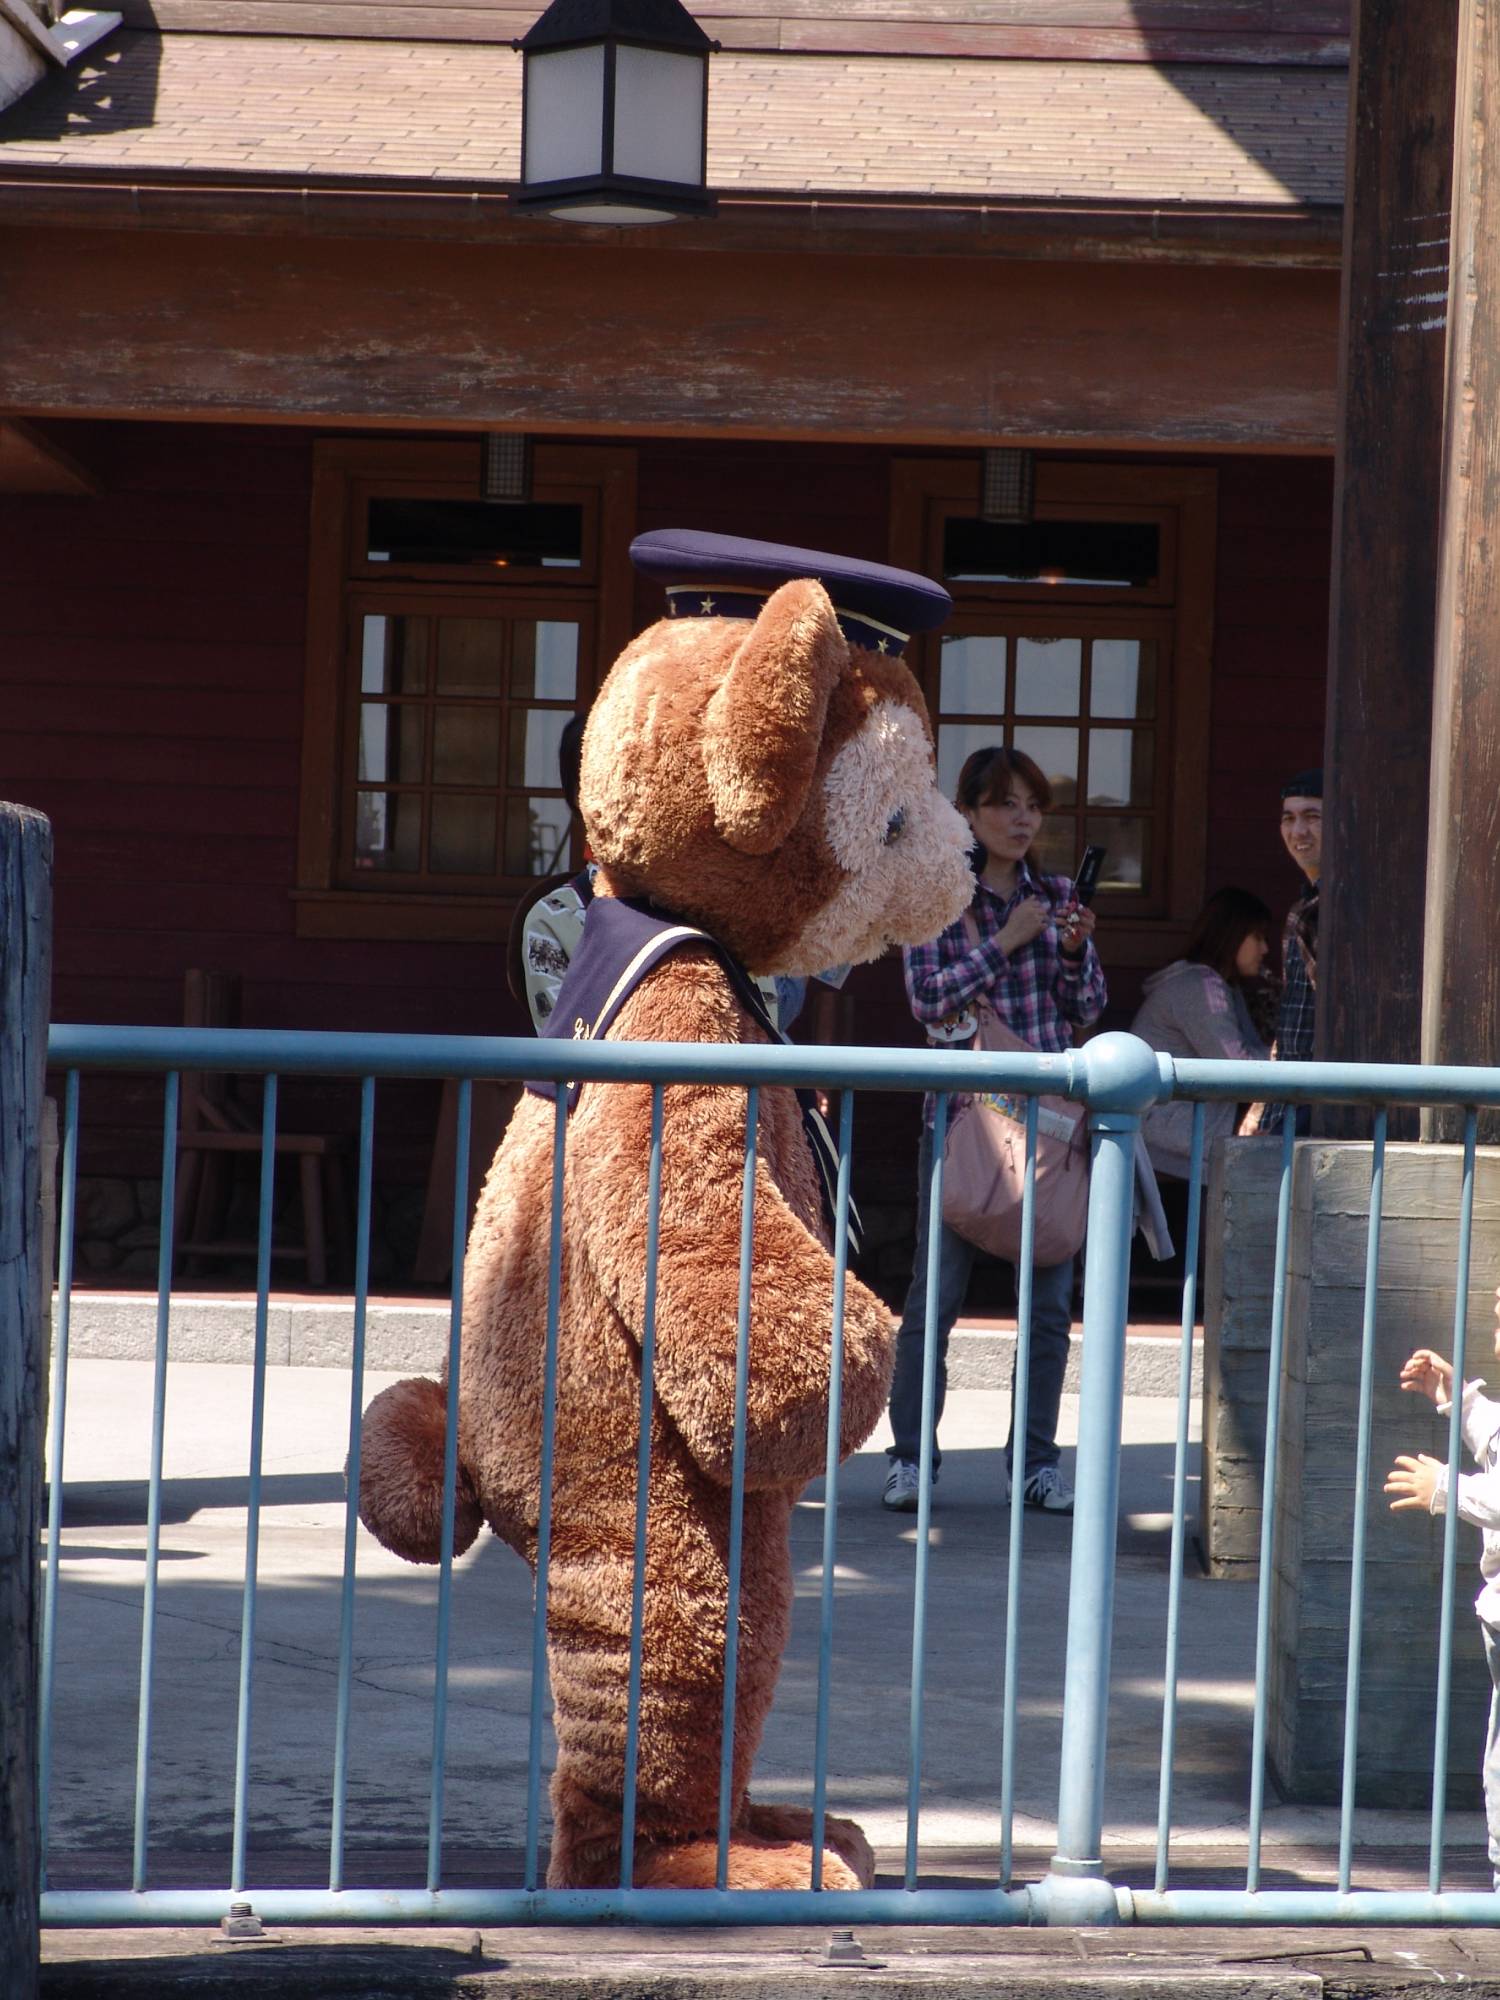 Tokyo Disney - Duffy the bear